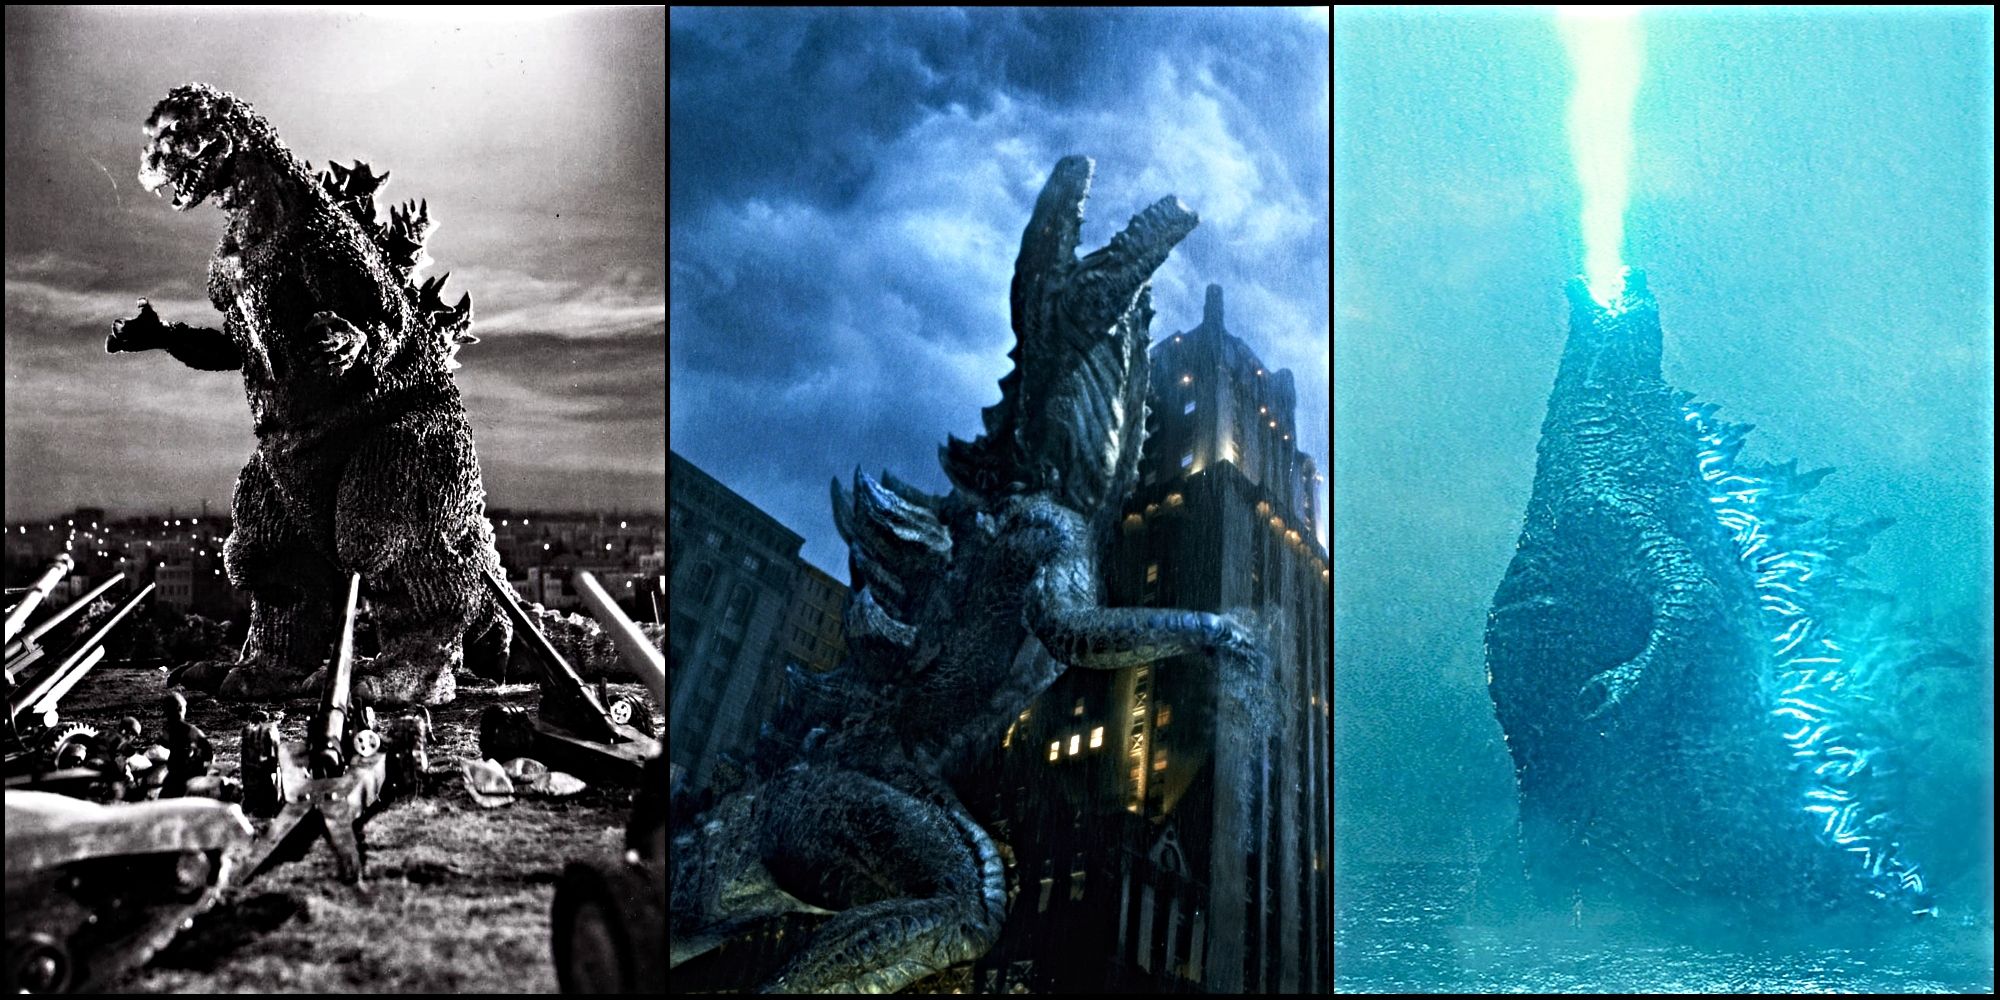 Korathos size comparison to Godzilla